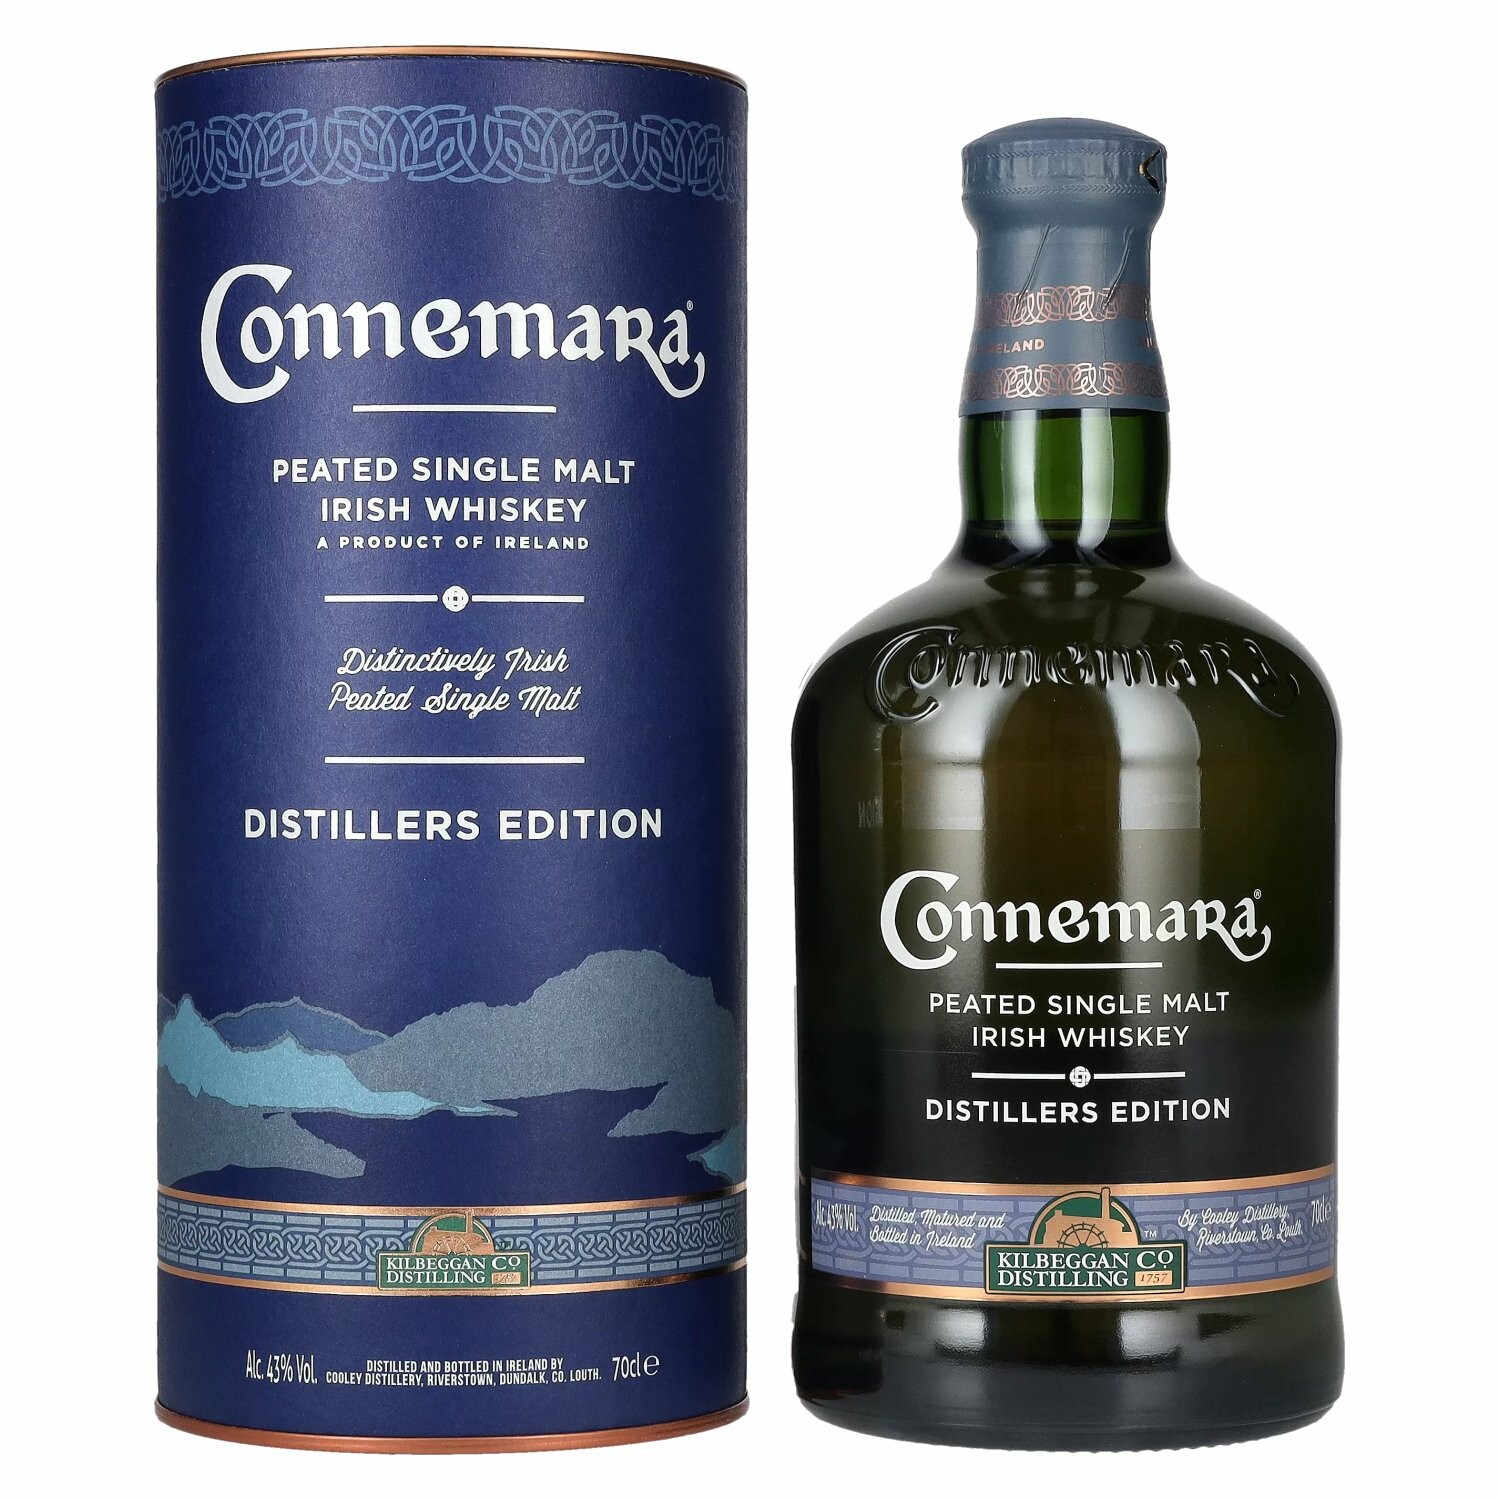 Connemara DISTILLERS EDITION Peated Single Malt Irish Whiskey 43% Vol. 0,7l in Giftbox